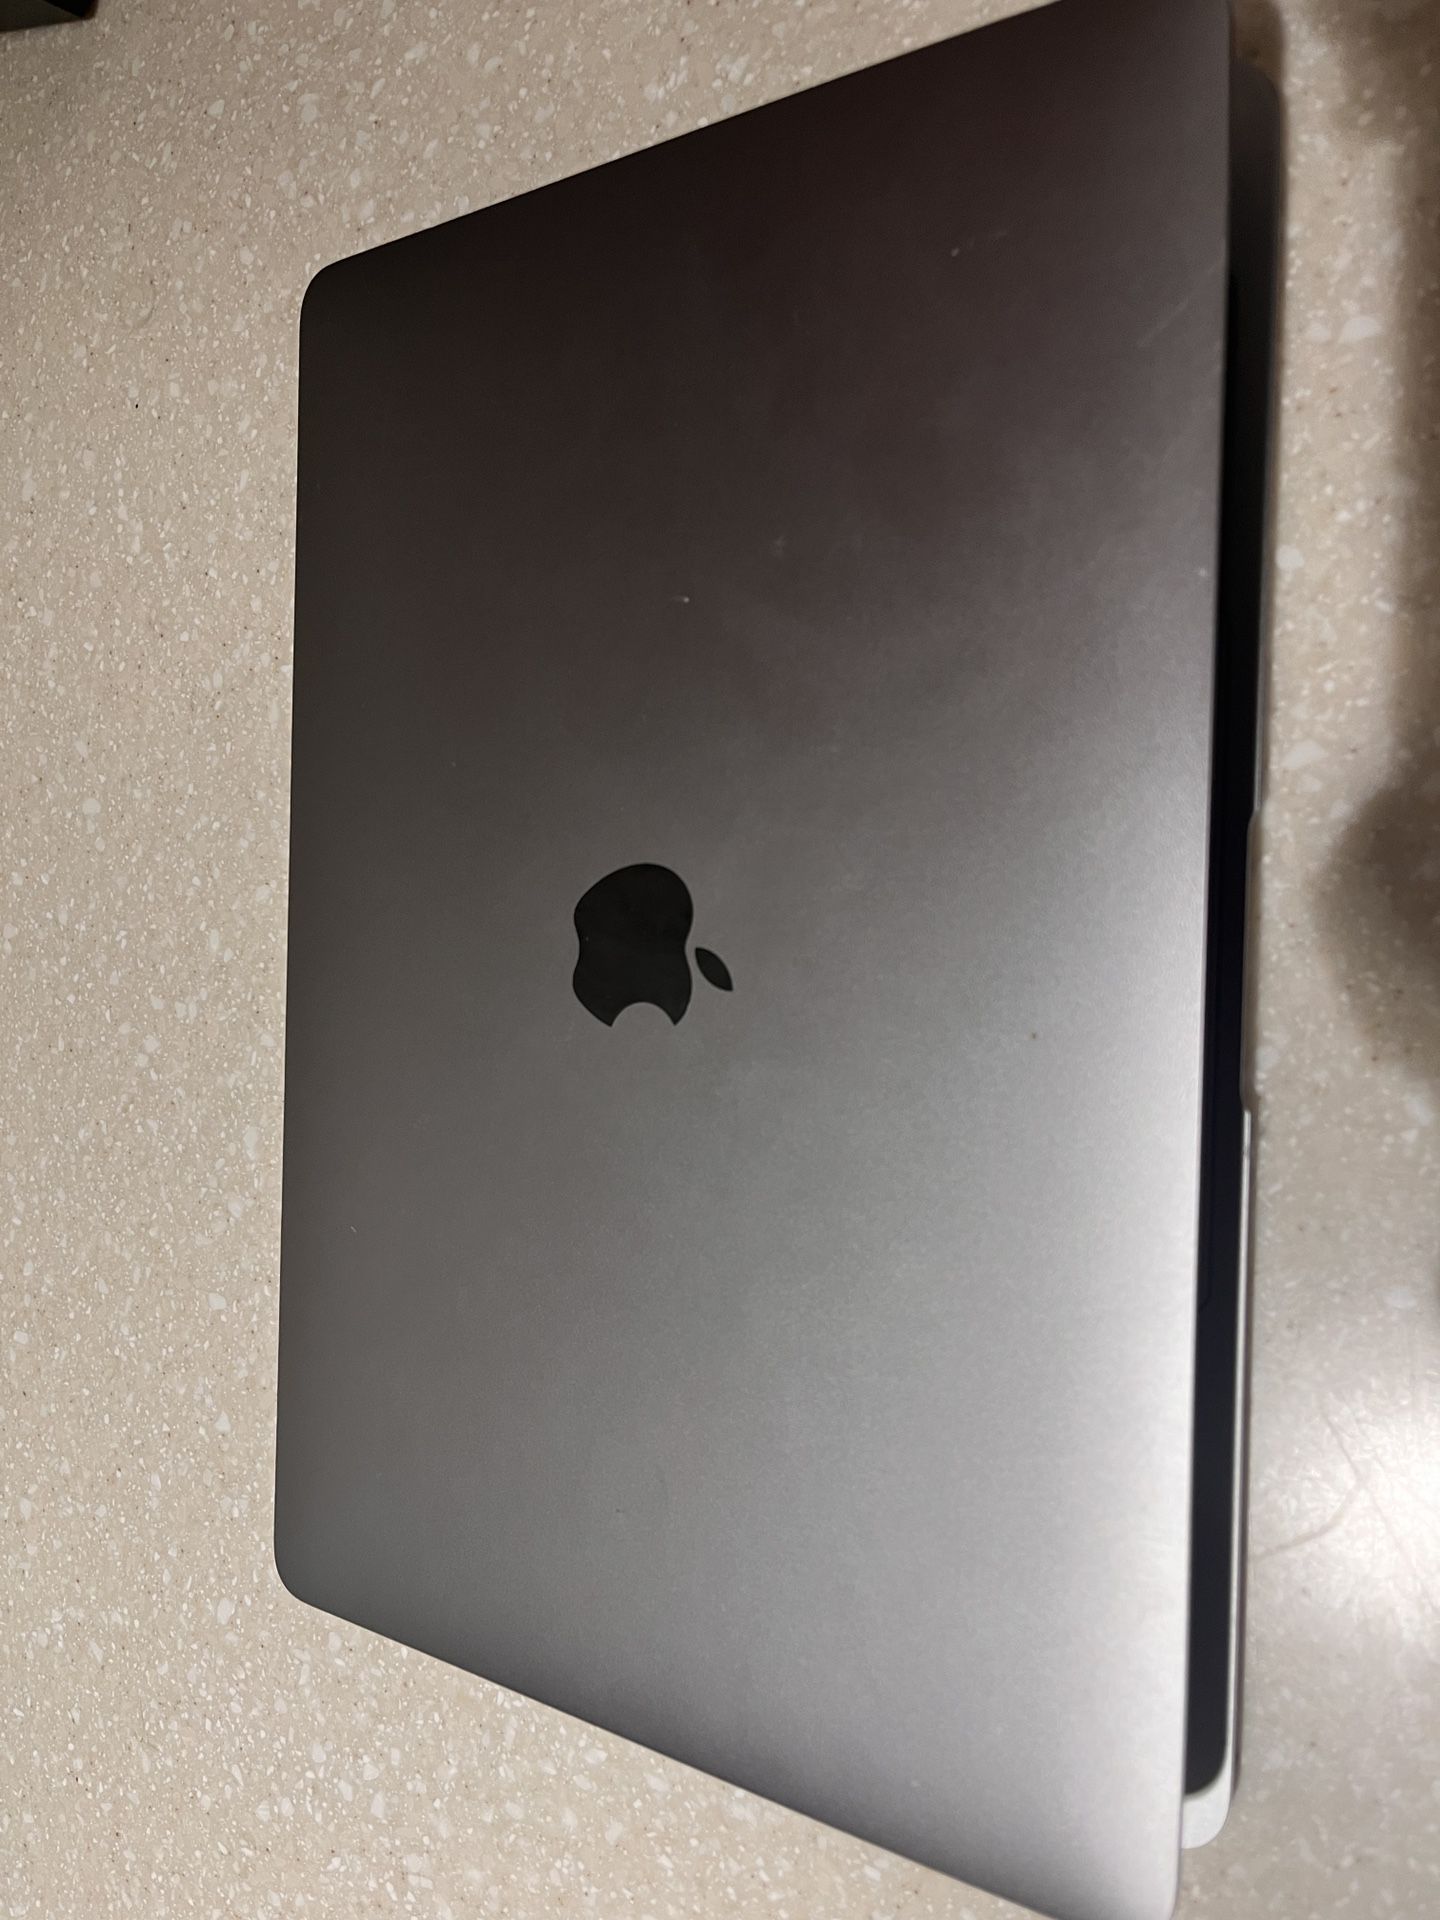 2019 13-inch MacBook Air